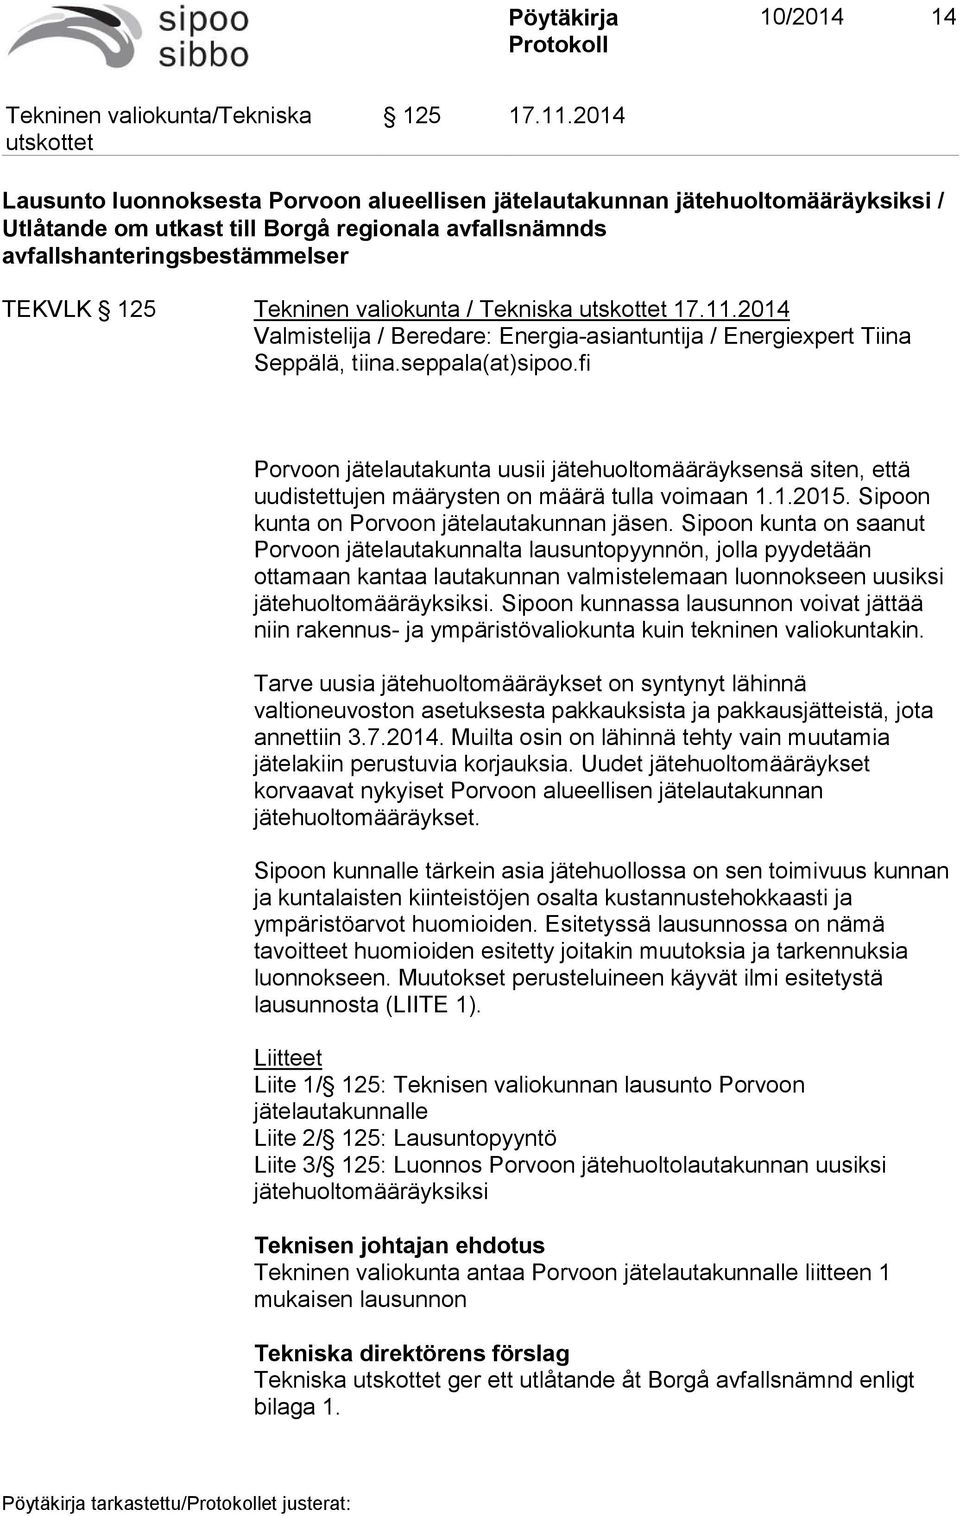 valiokunta / Tekniska 17.11.2014 Valmistelija / Beredare: Energia-asiantuntija / Energiexpert Tiina Seppälä, tiina.seppala(at)sipoo.